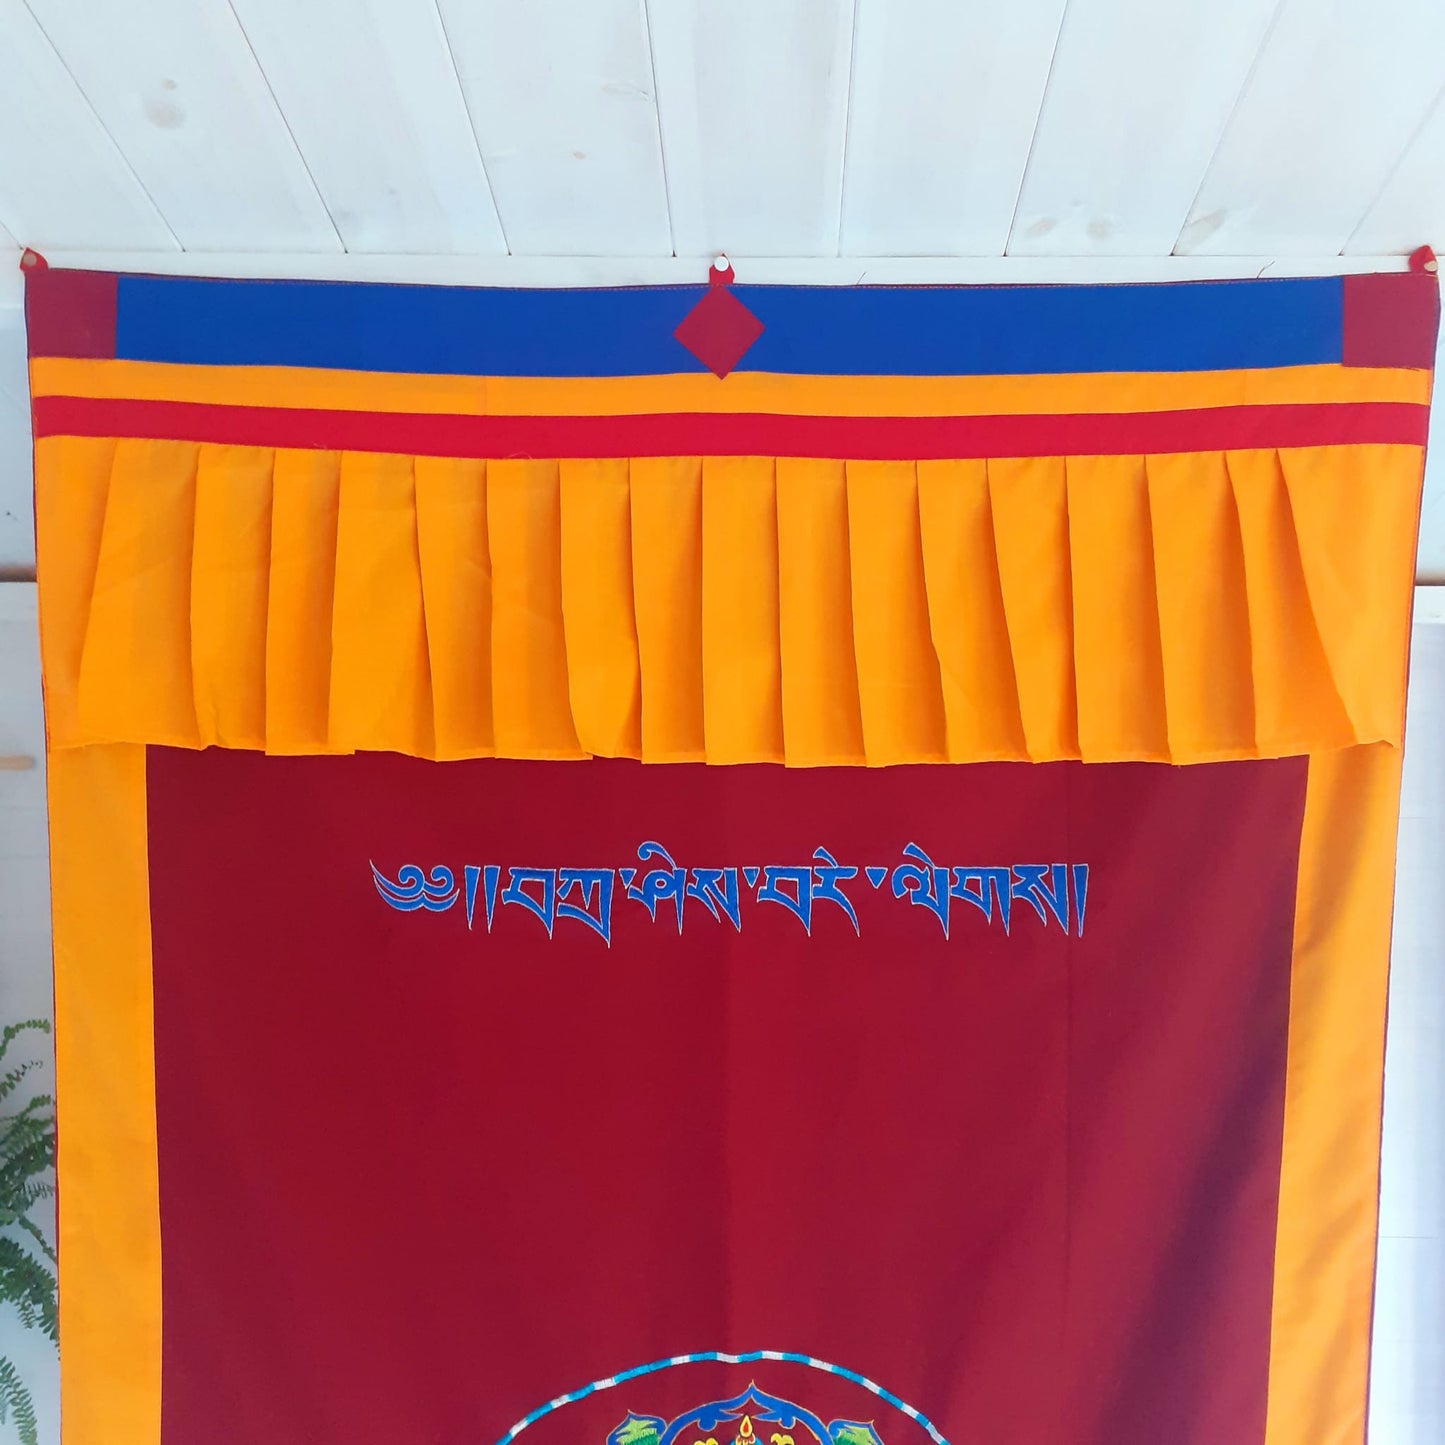 Tibetan Eight Lucky Mandala Door Curtain